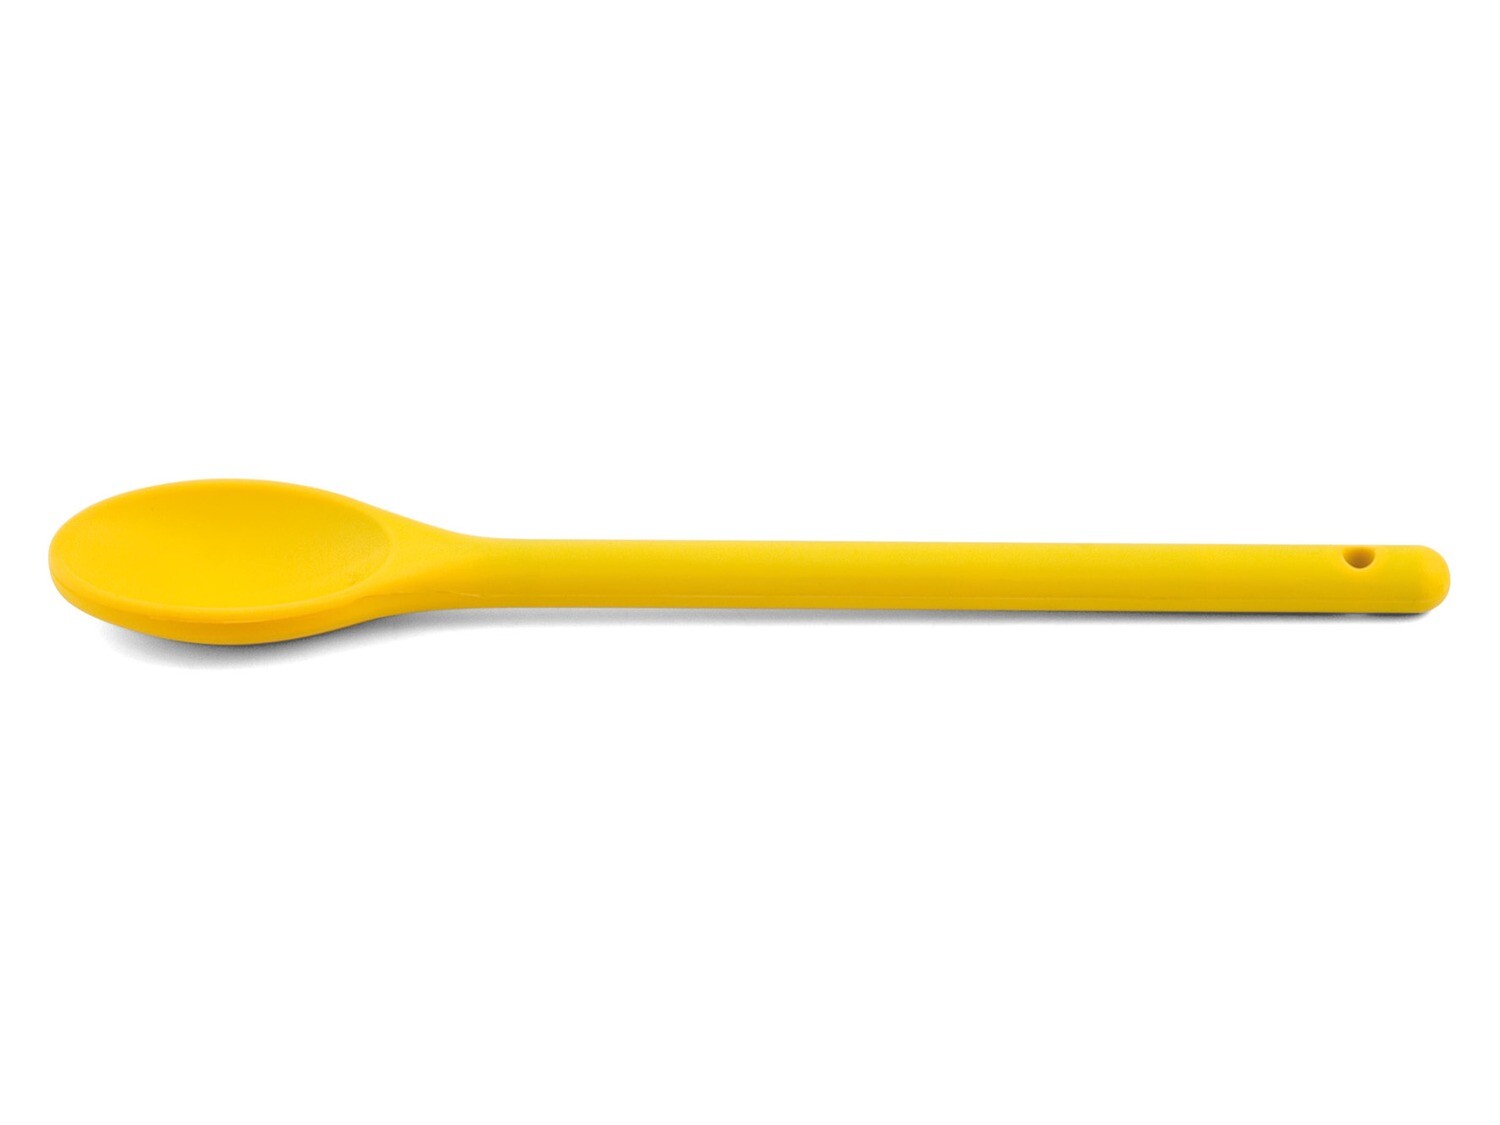 Cucchiaio in silicone 30 cm giallo - Weis